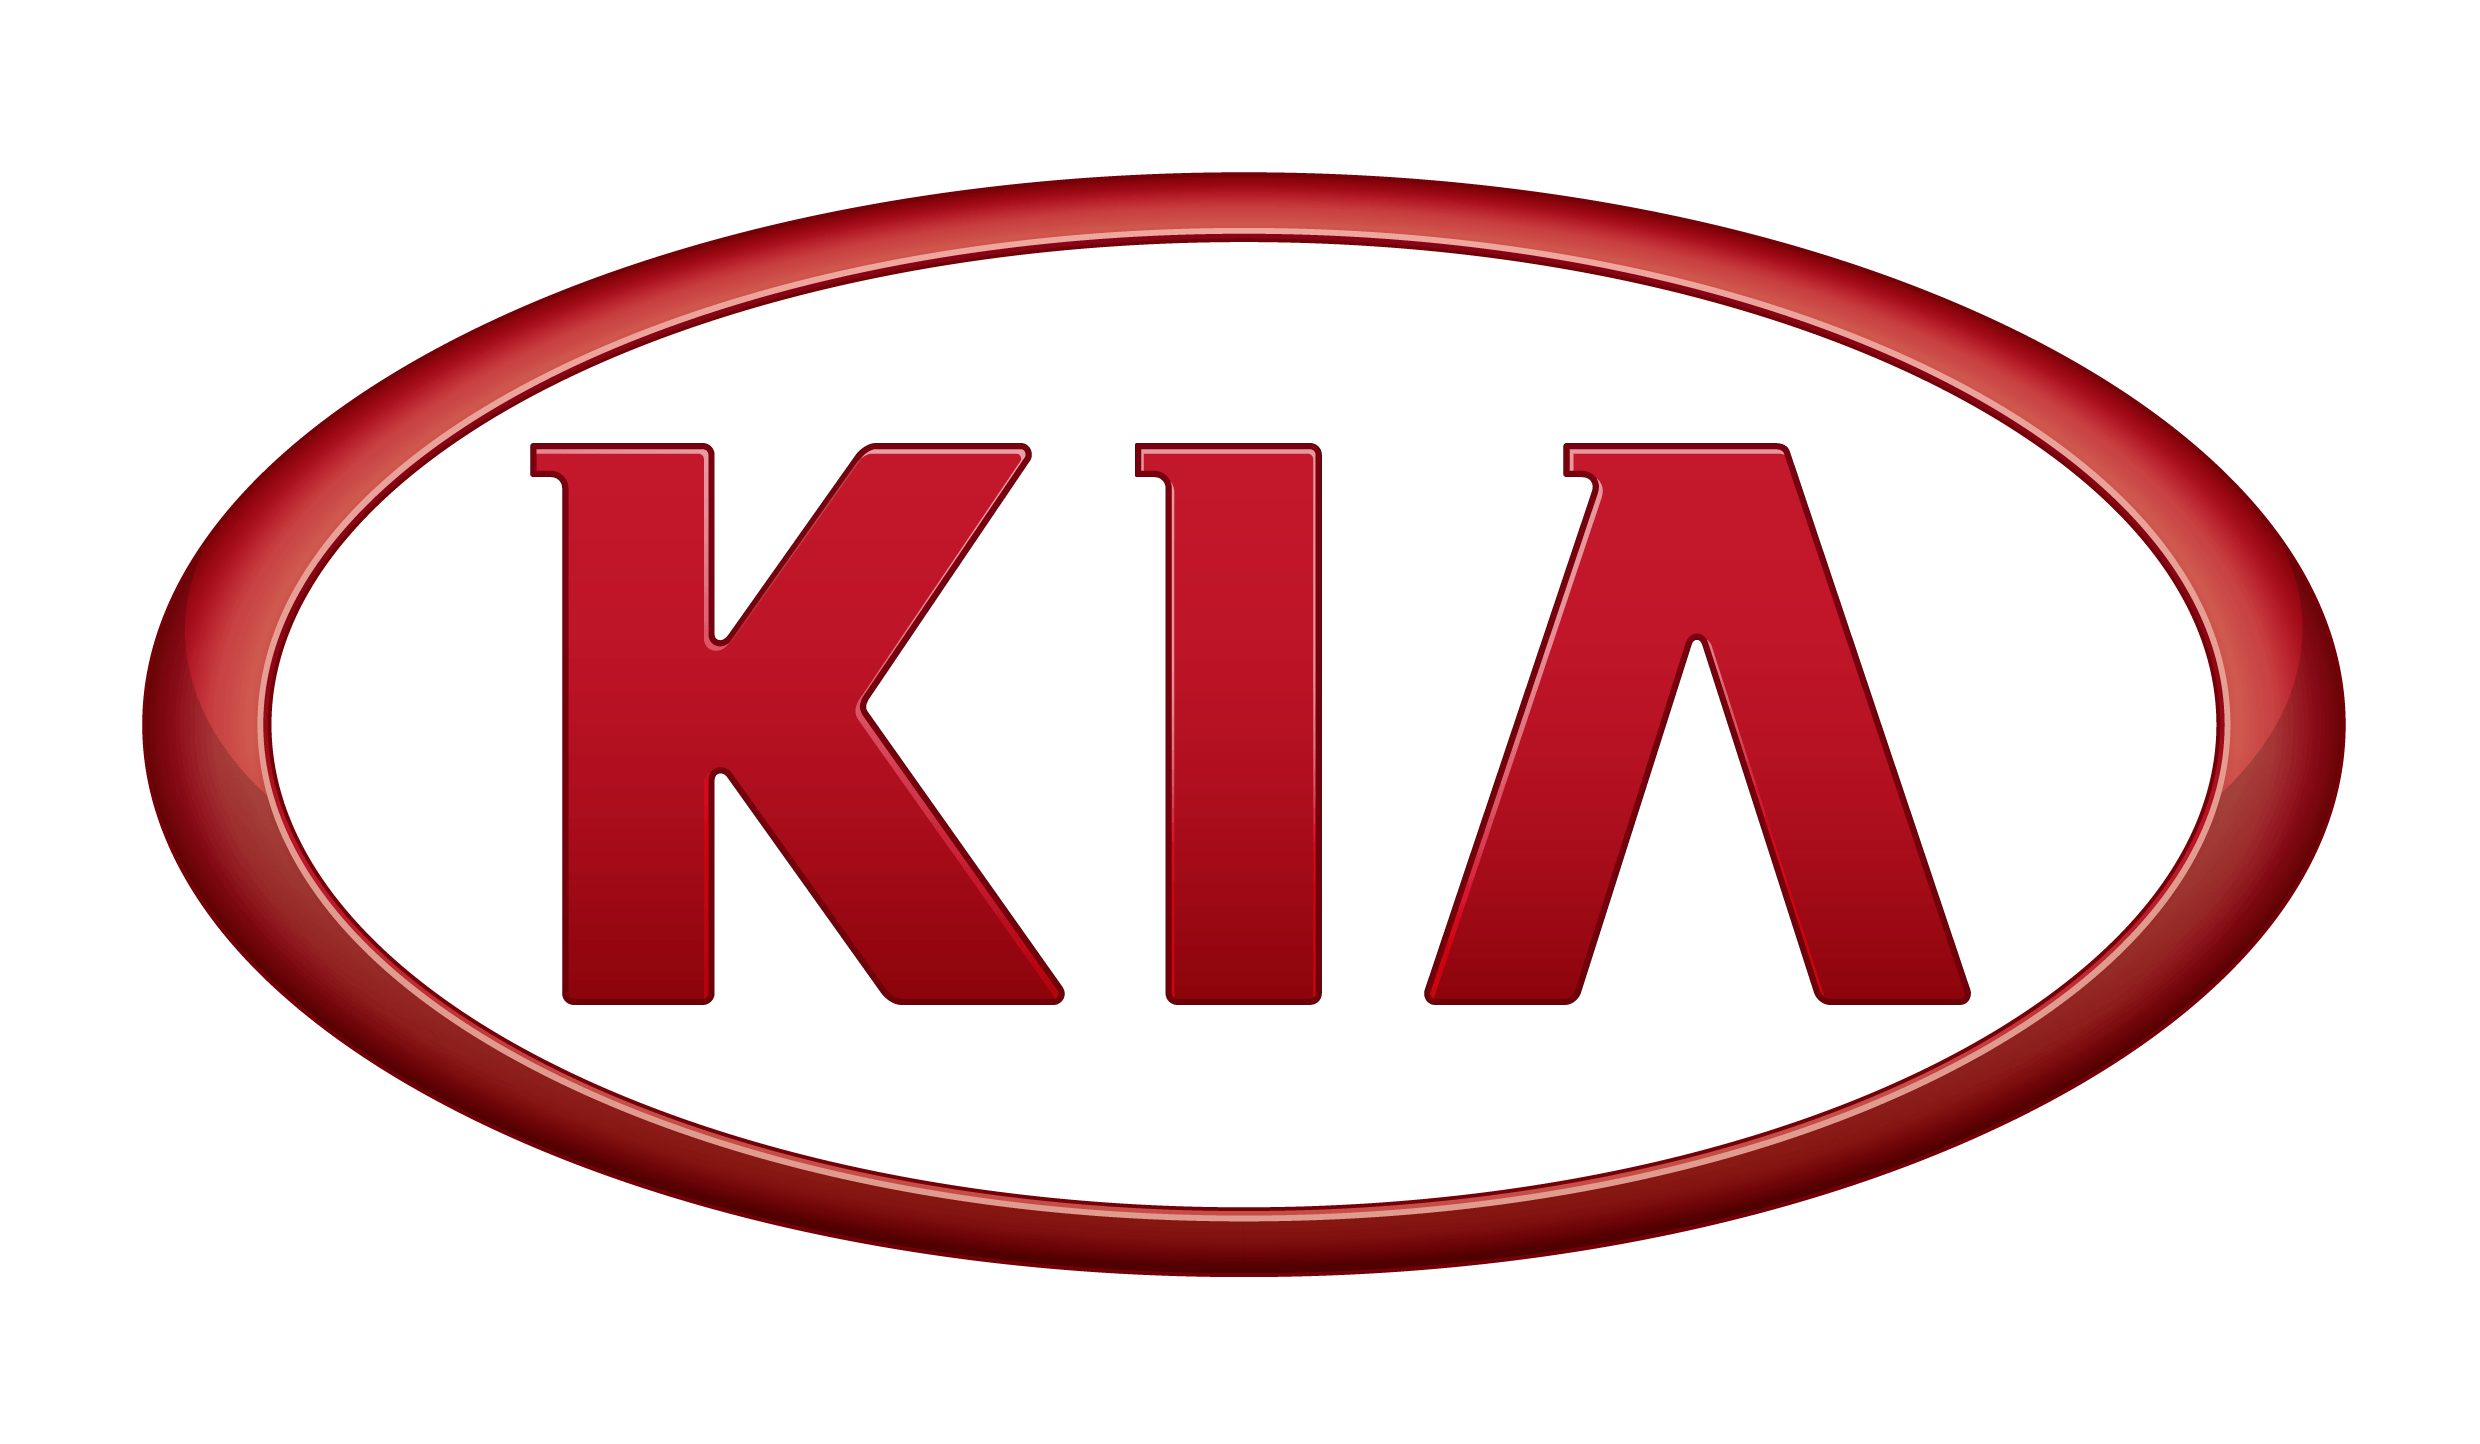 Red as Logo - Kia Logo, Kia Car Symbol Meaning and History | Car Brand Names.com